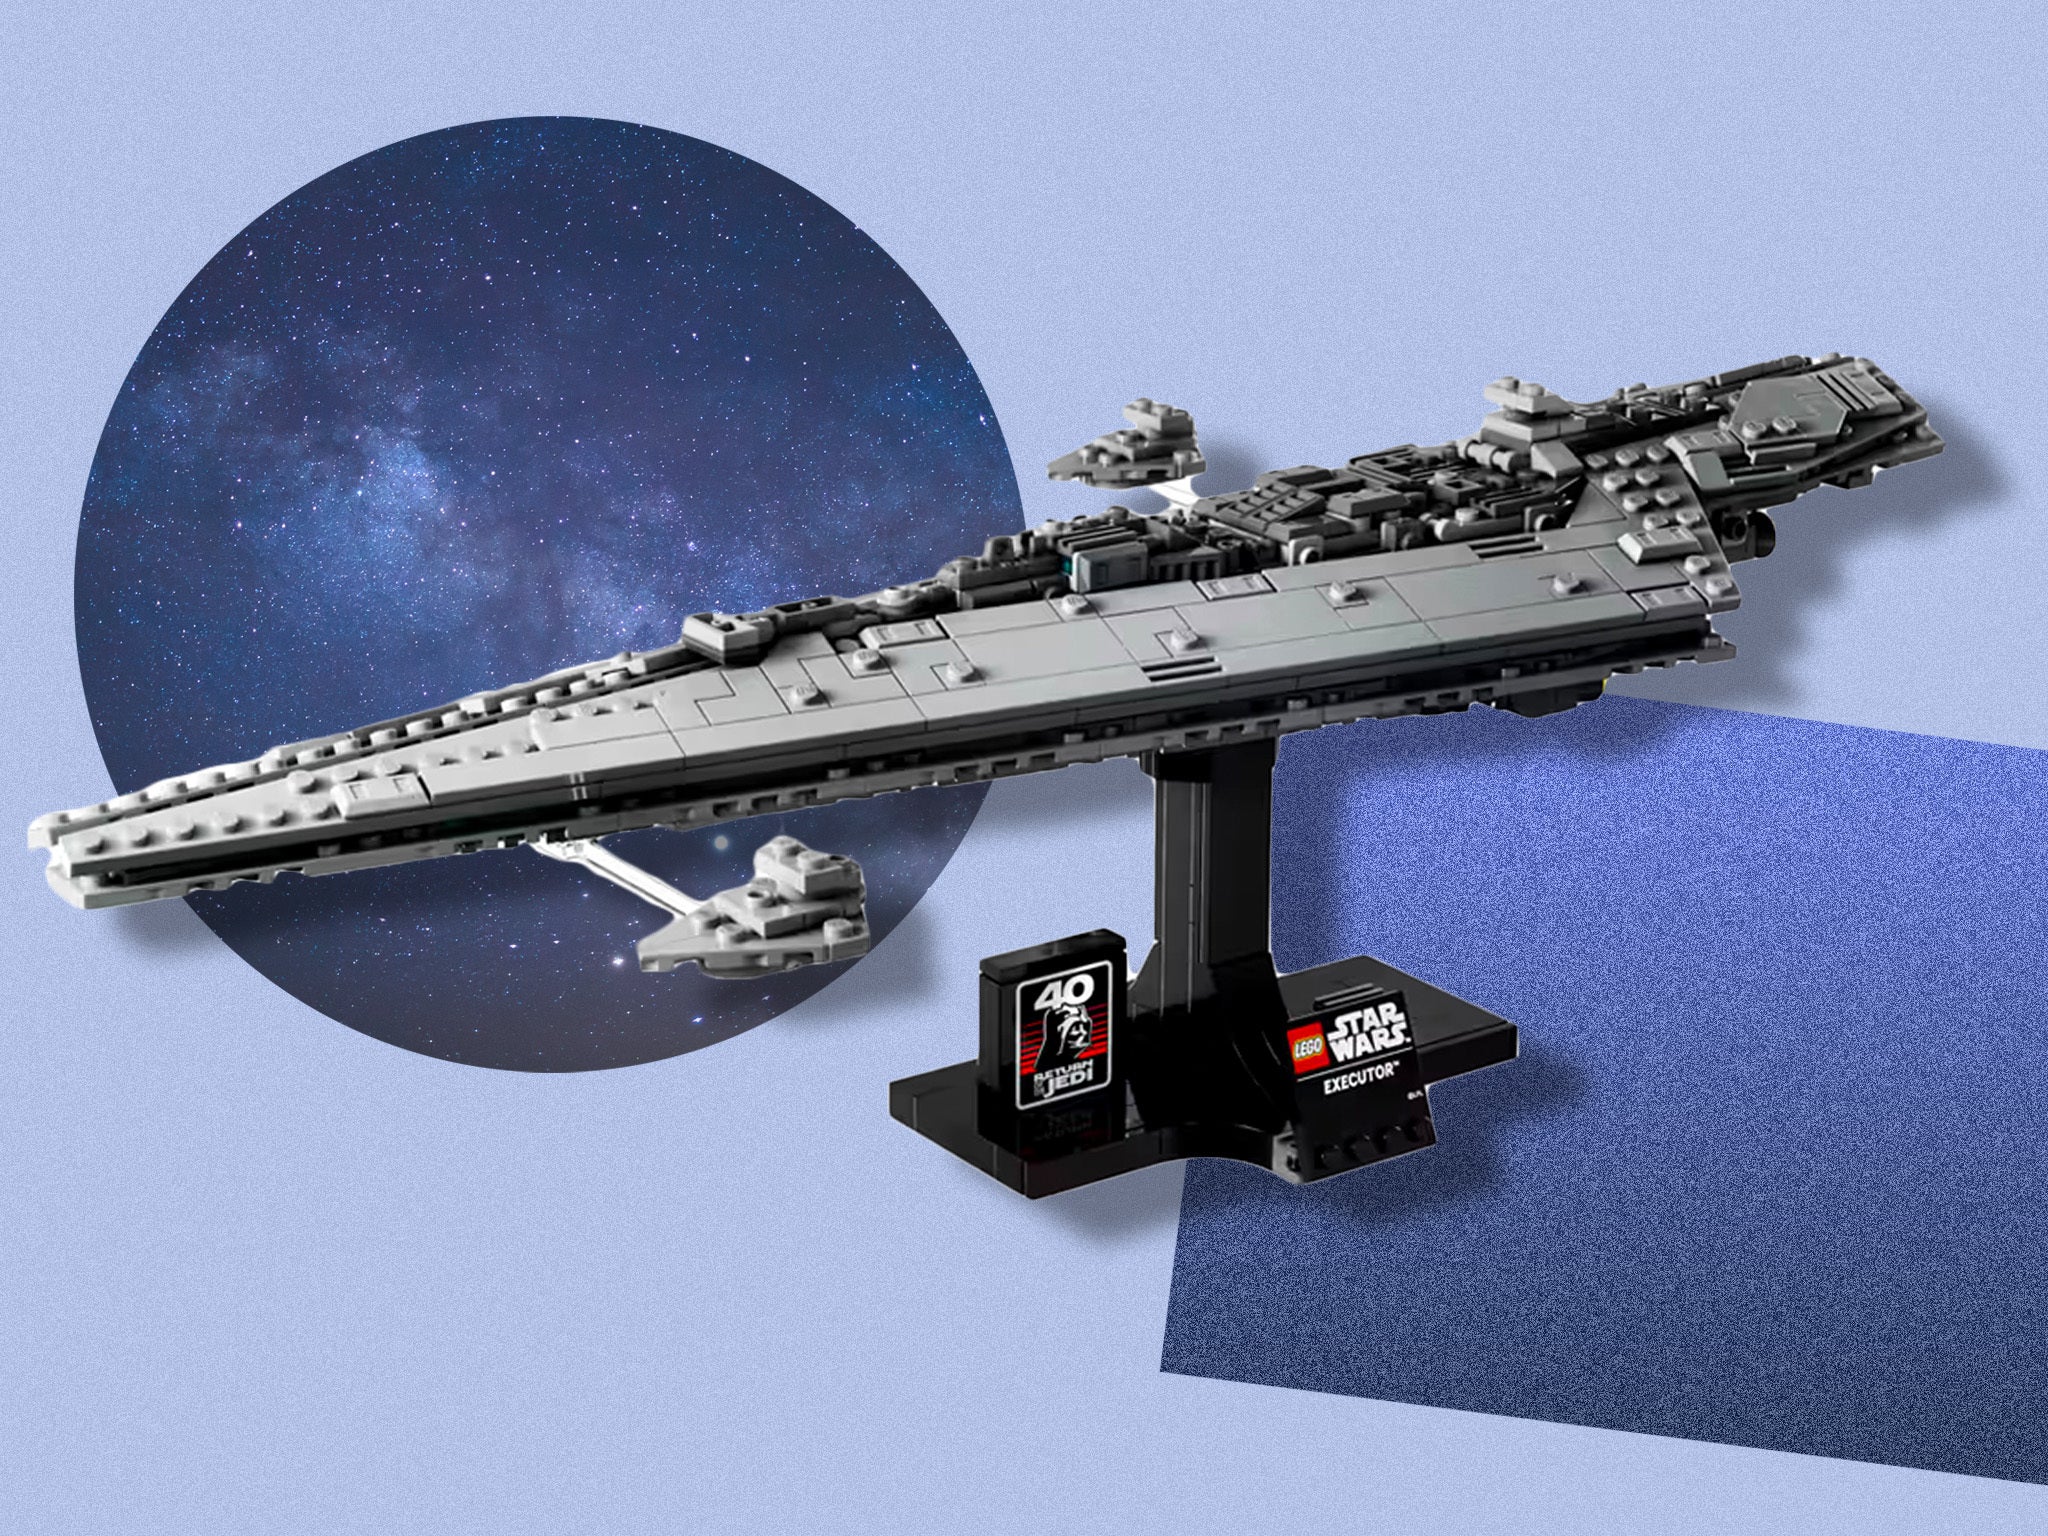 Lego Star Wars super star destroyer set: Price, release date and